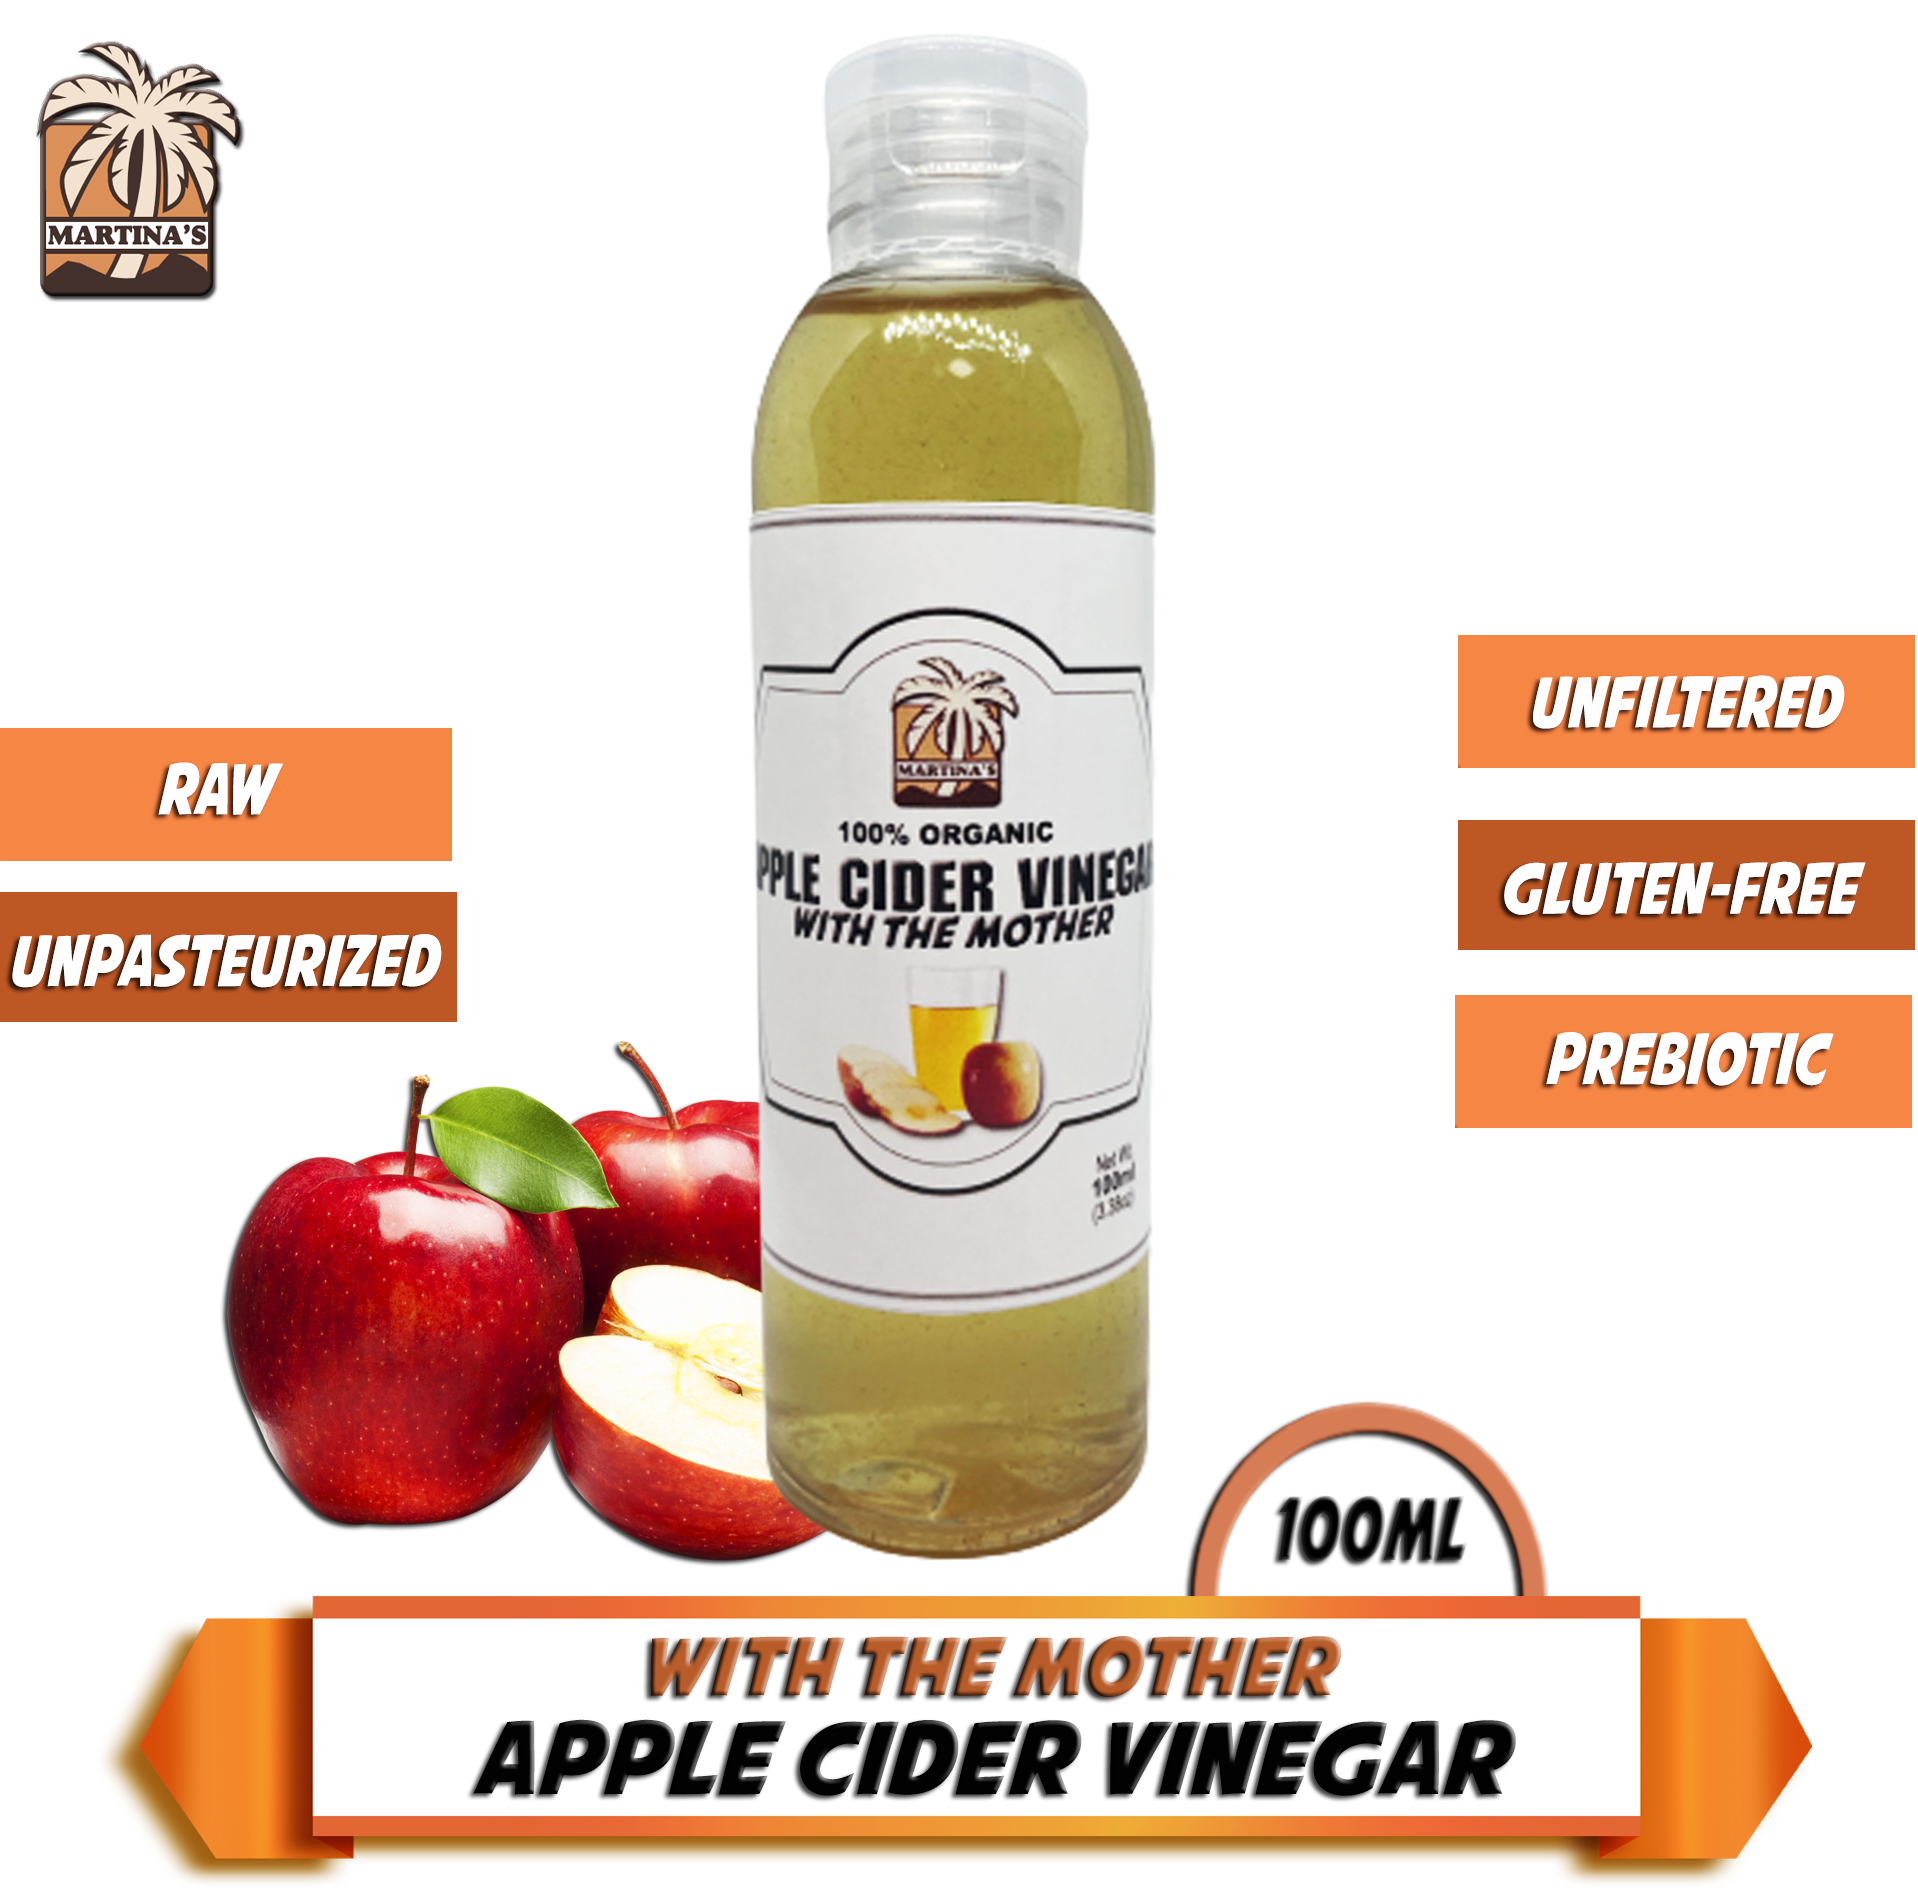 Martina's Apple Cider Vinegar Toner - Healthy Skin Benefits